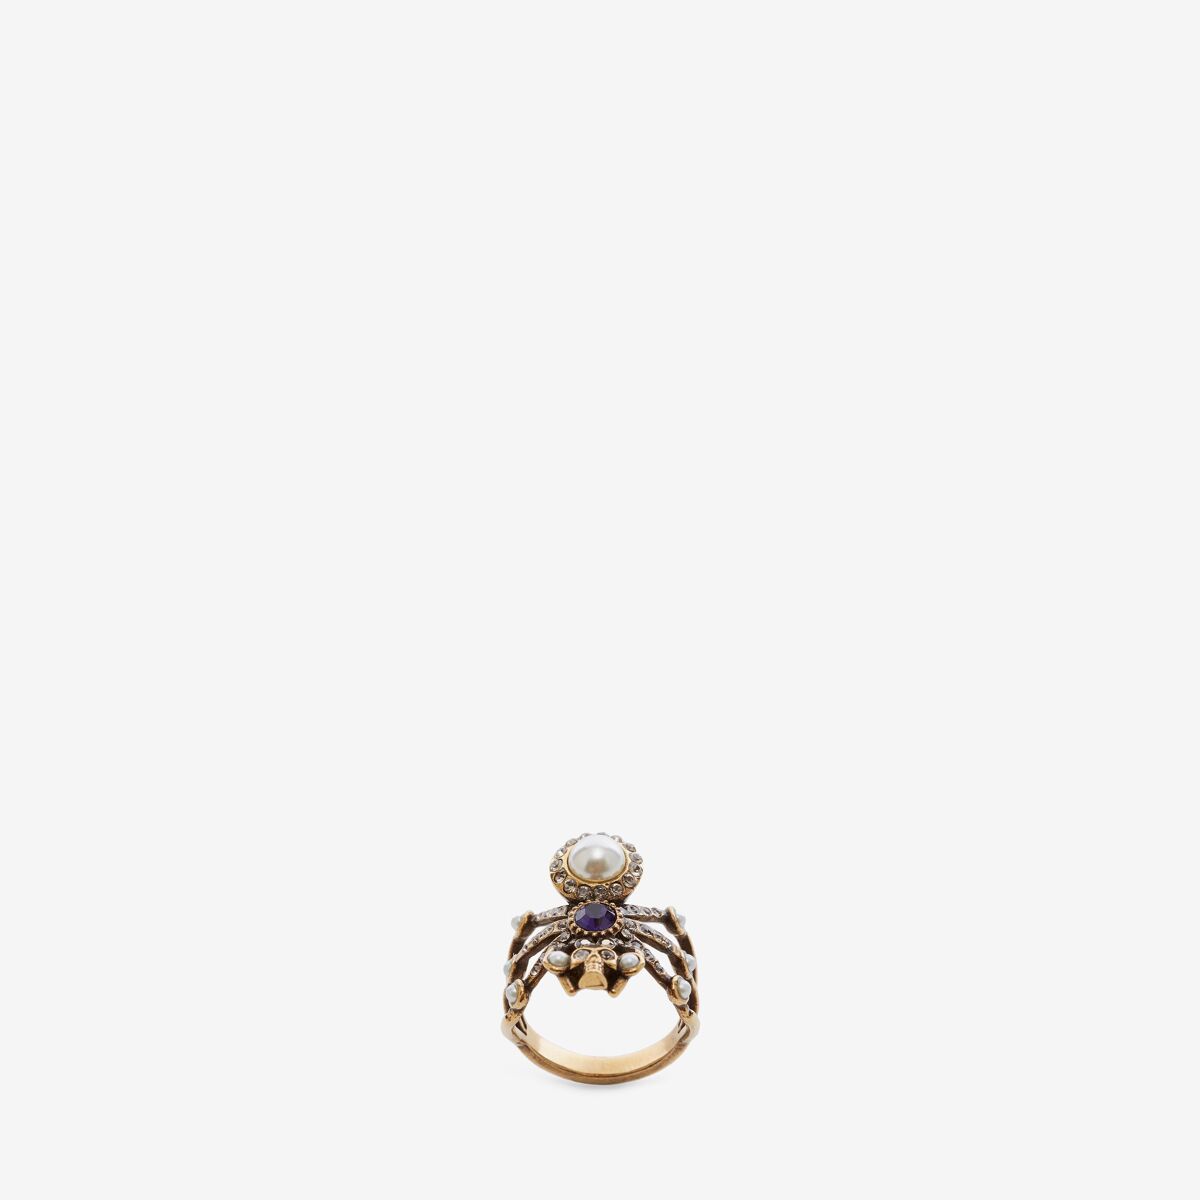 ALEXANDER MCQUEEN - Spider Ring - Item 569675J160T8690